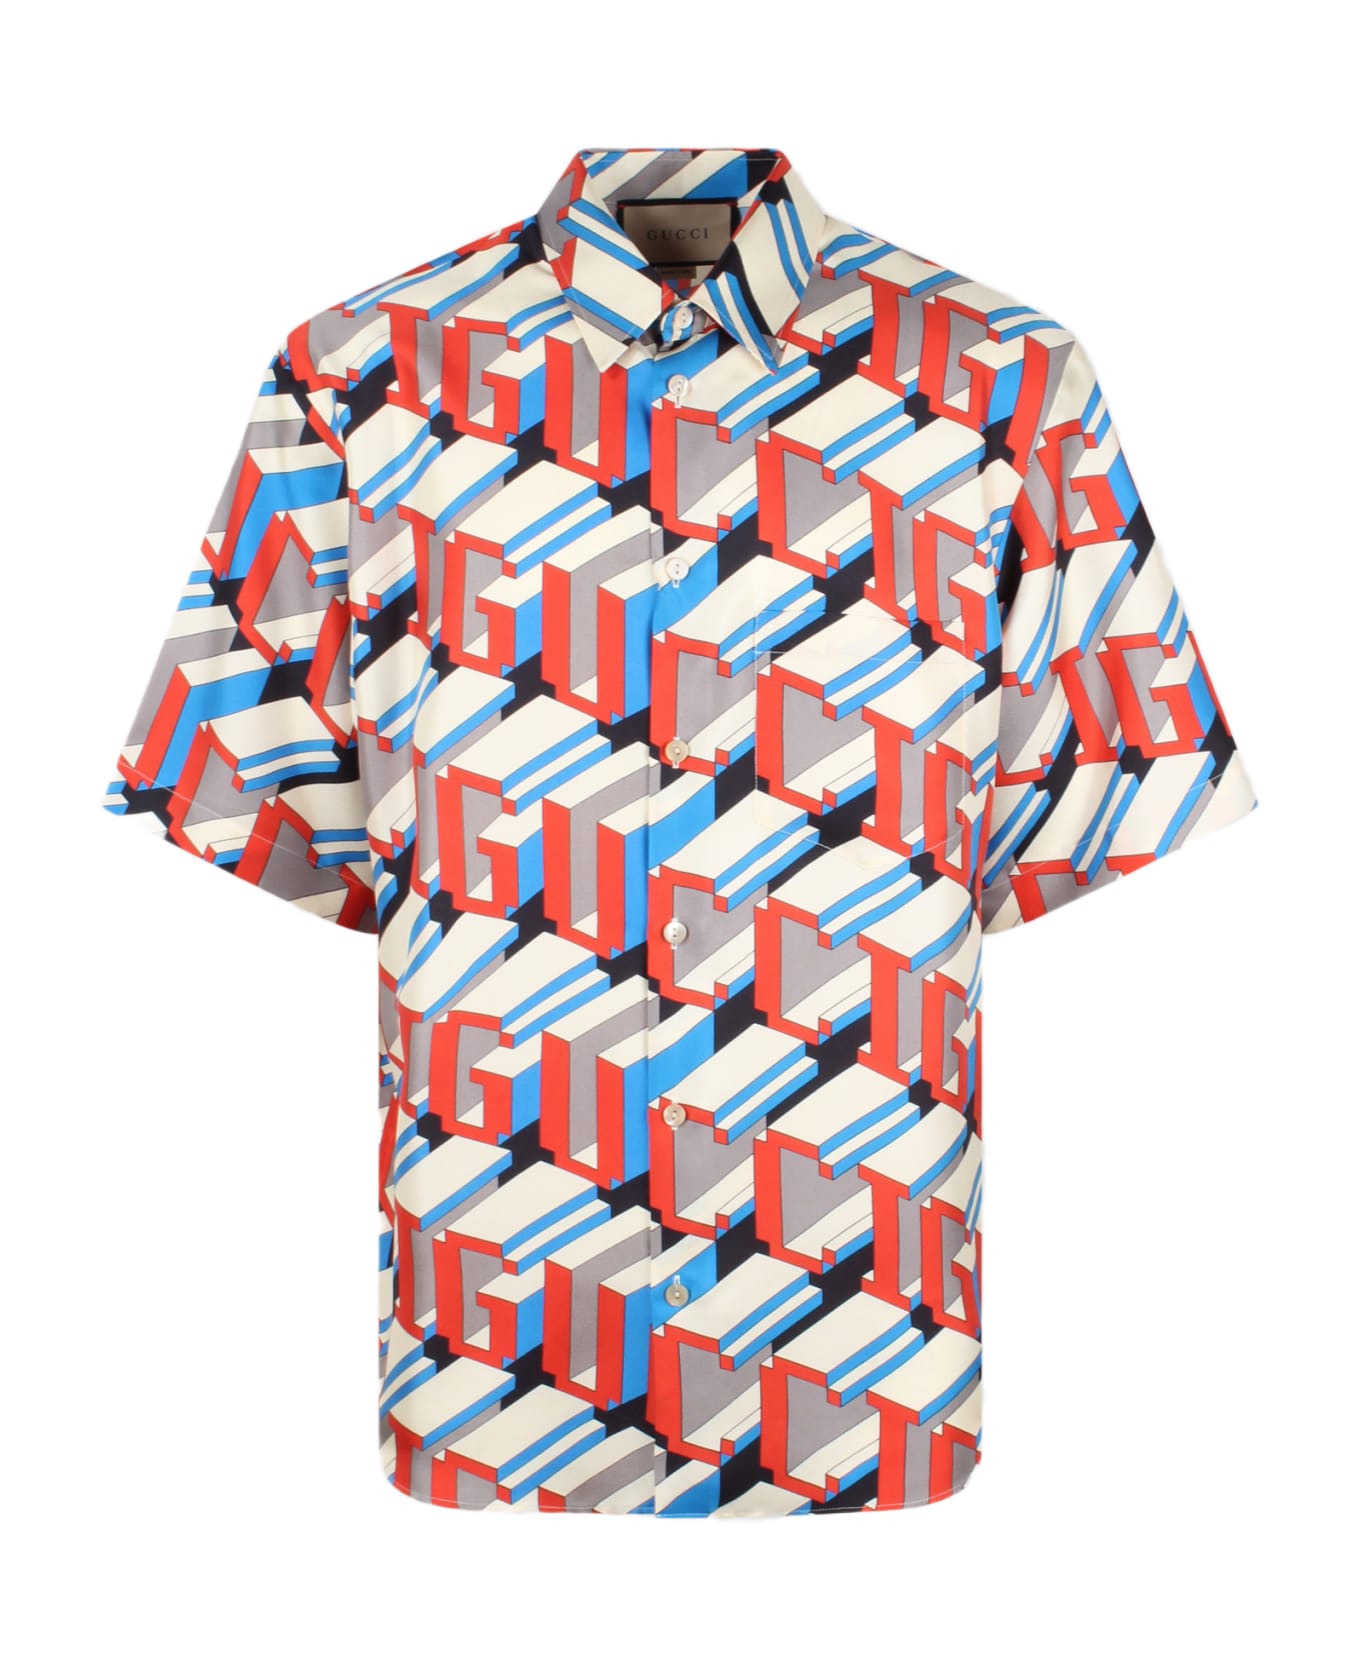 Gucci Pixel Print Silk Shirt - Multicolour シャツ